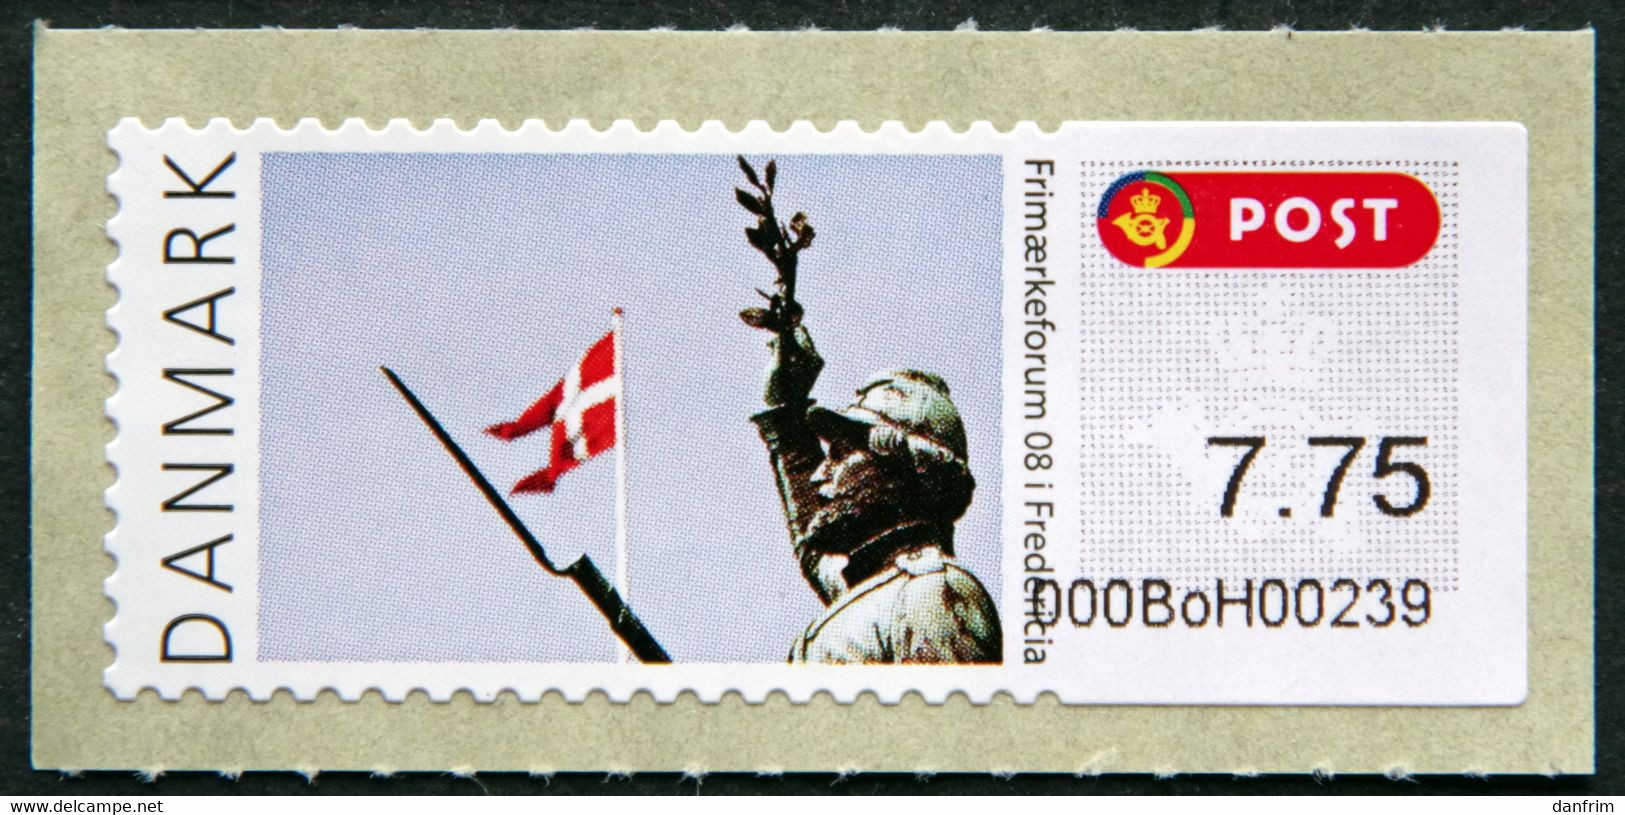 Denmark 2008 MiNr.46 (**) ( Lot H 575 ) ATM Franking Labels - Machine Labels [ATM]